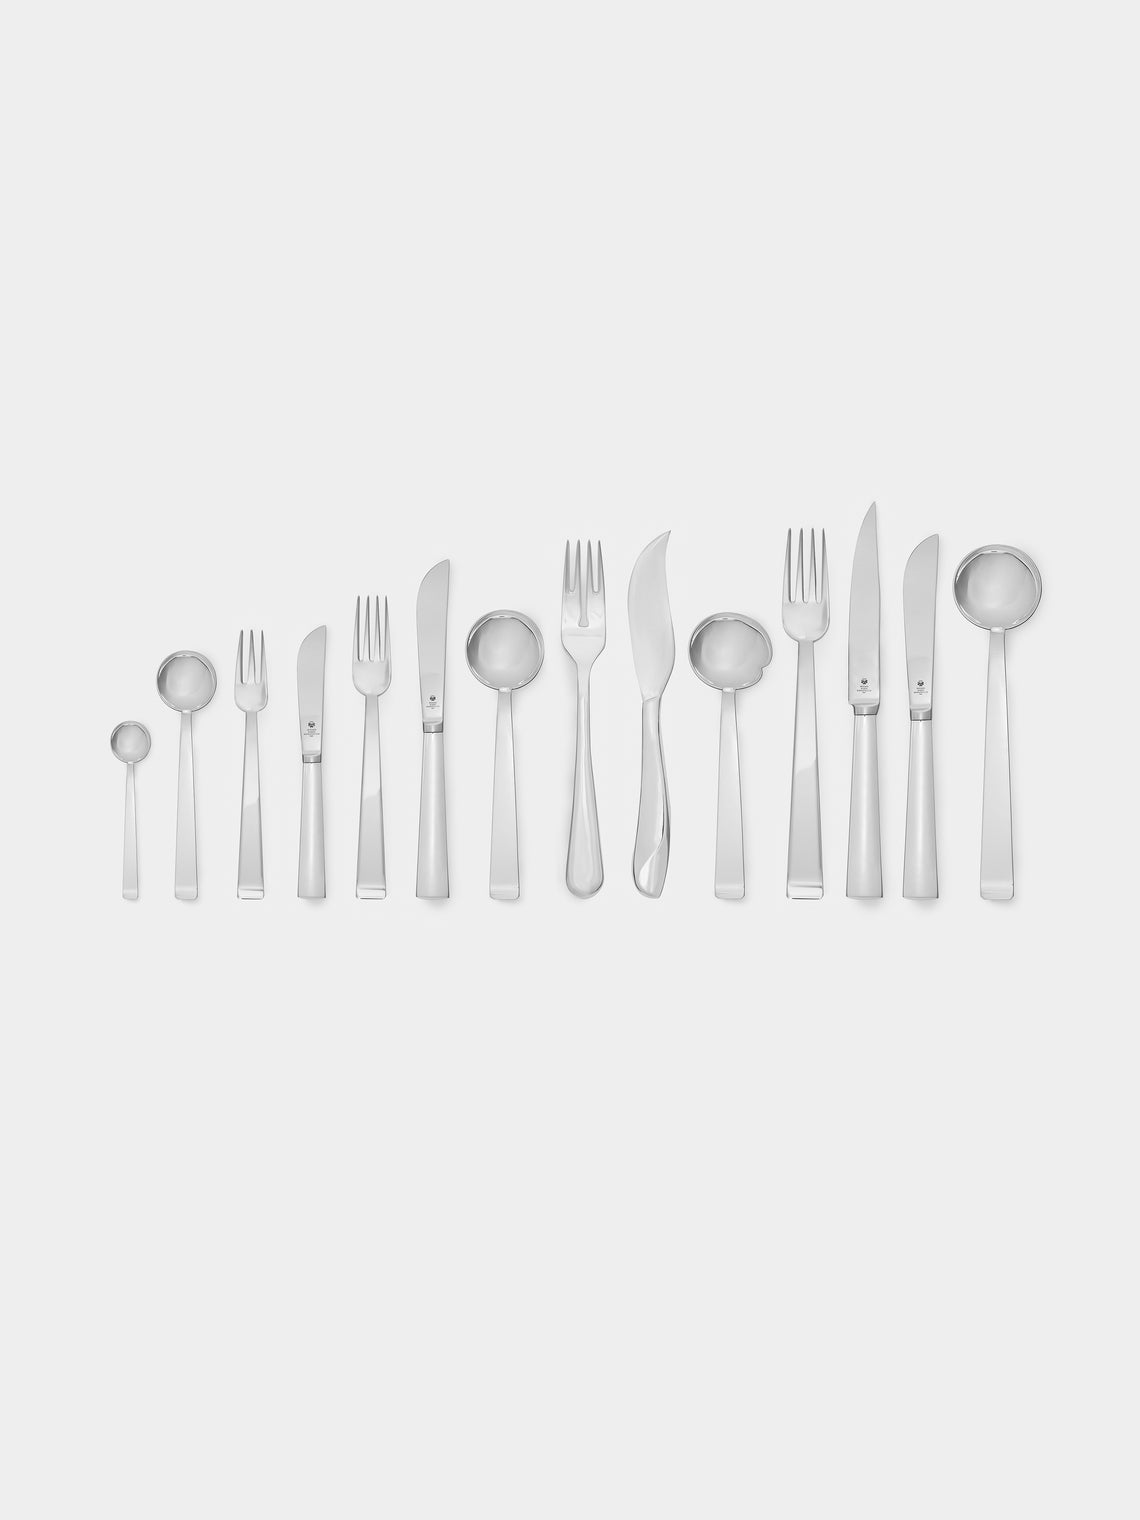 Wiener Silber Manufactur - Josef Hoffmann 135 Silver-Plated Dessert Knife - Silver - ABASK